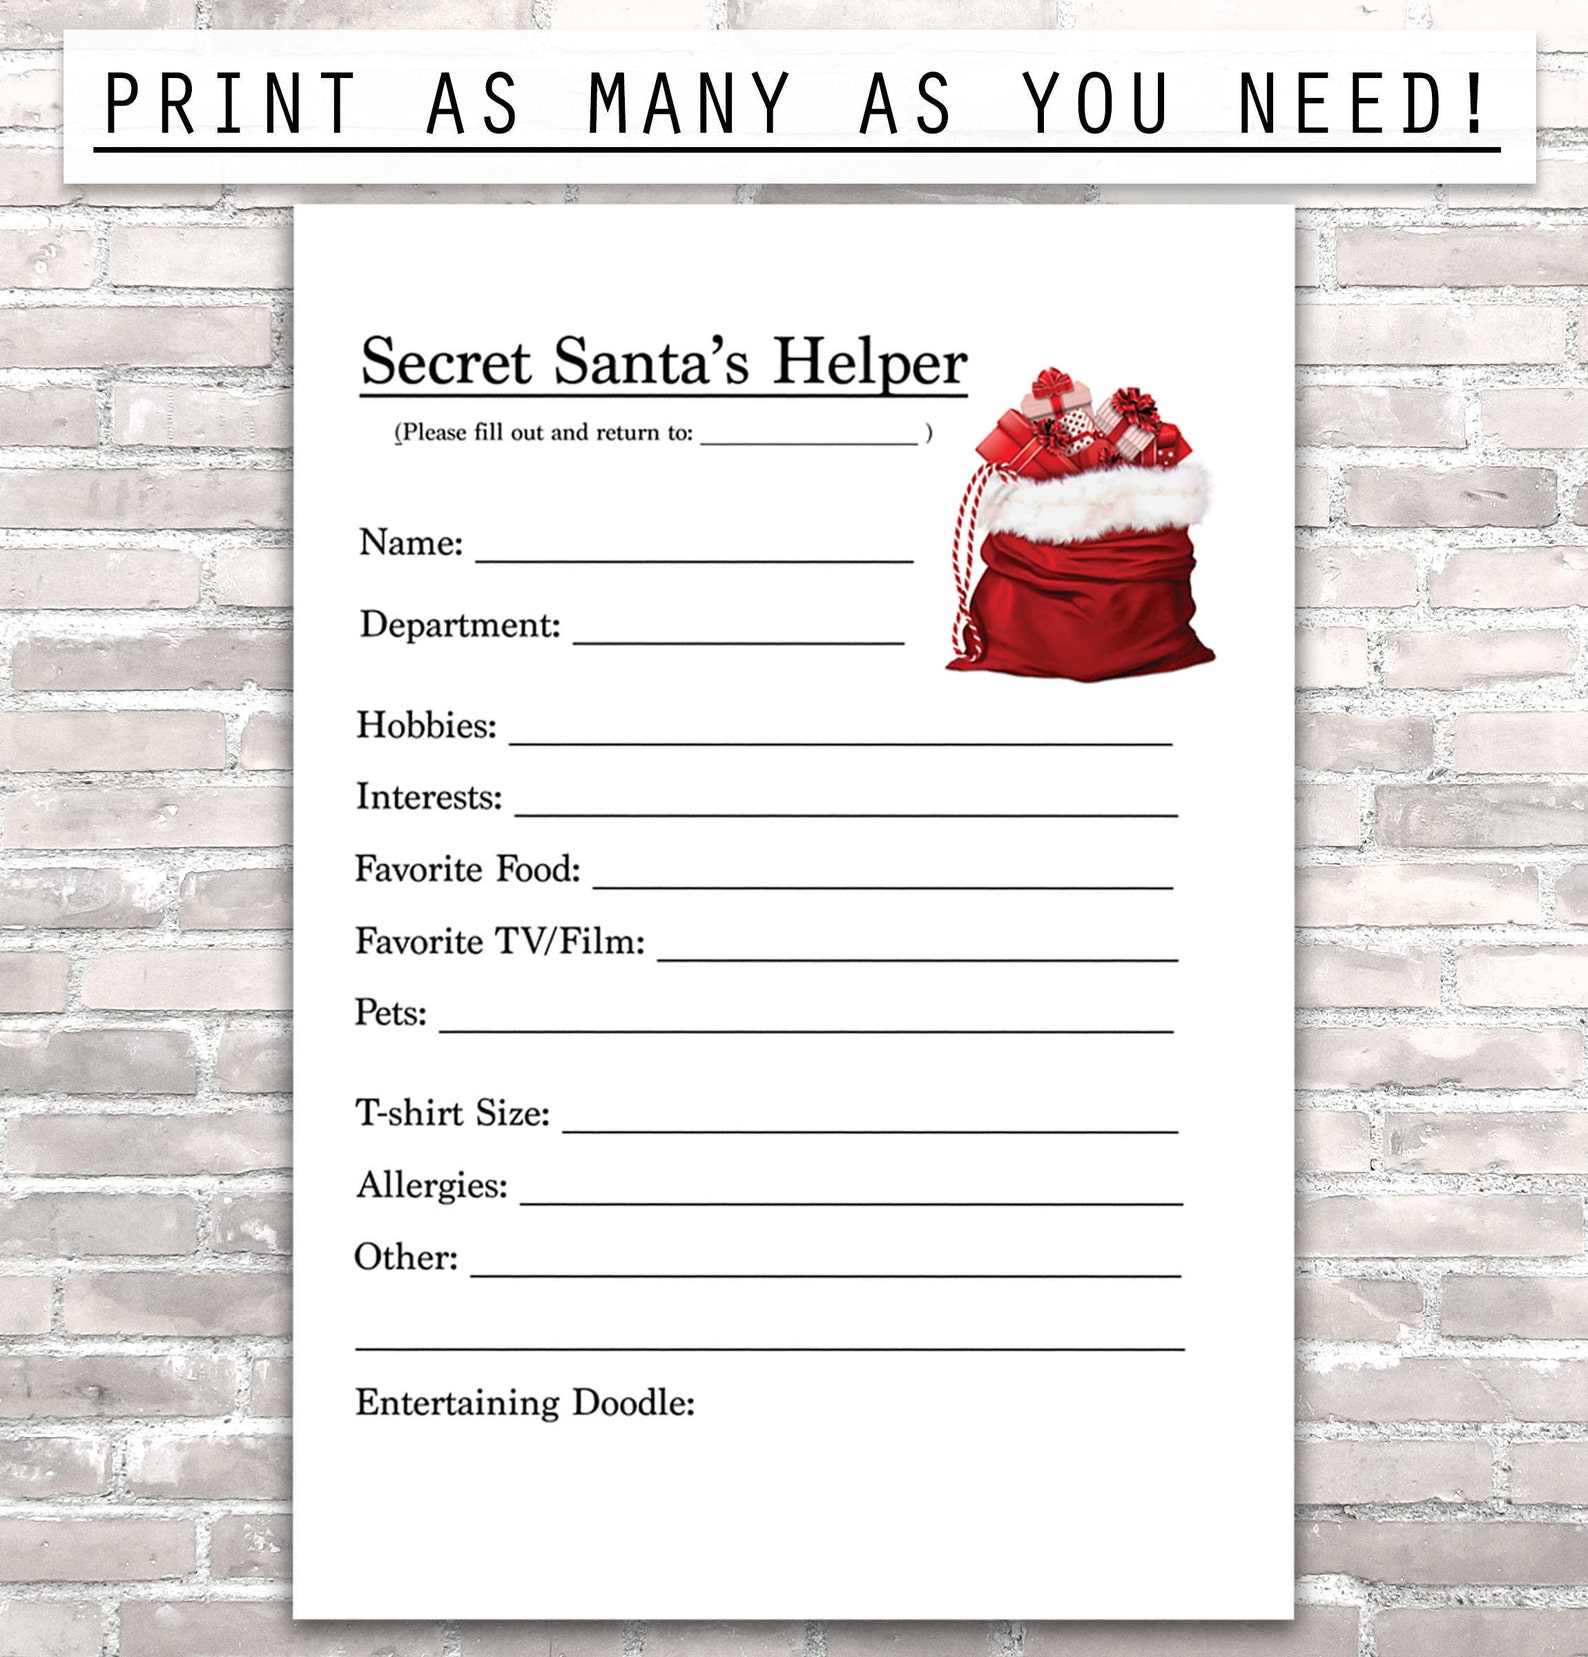 secret-santa-s-helper-printable-secret-santa-form-etsy